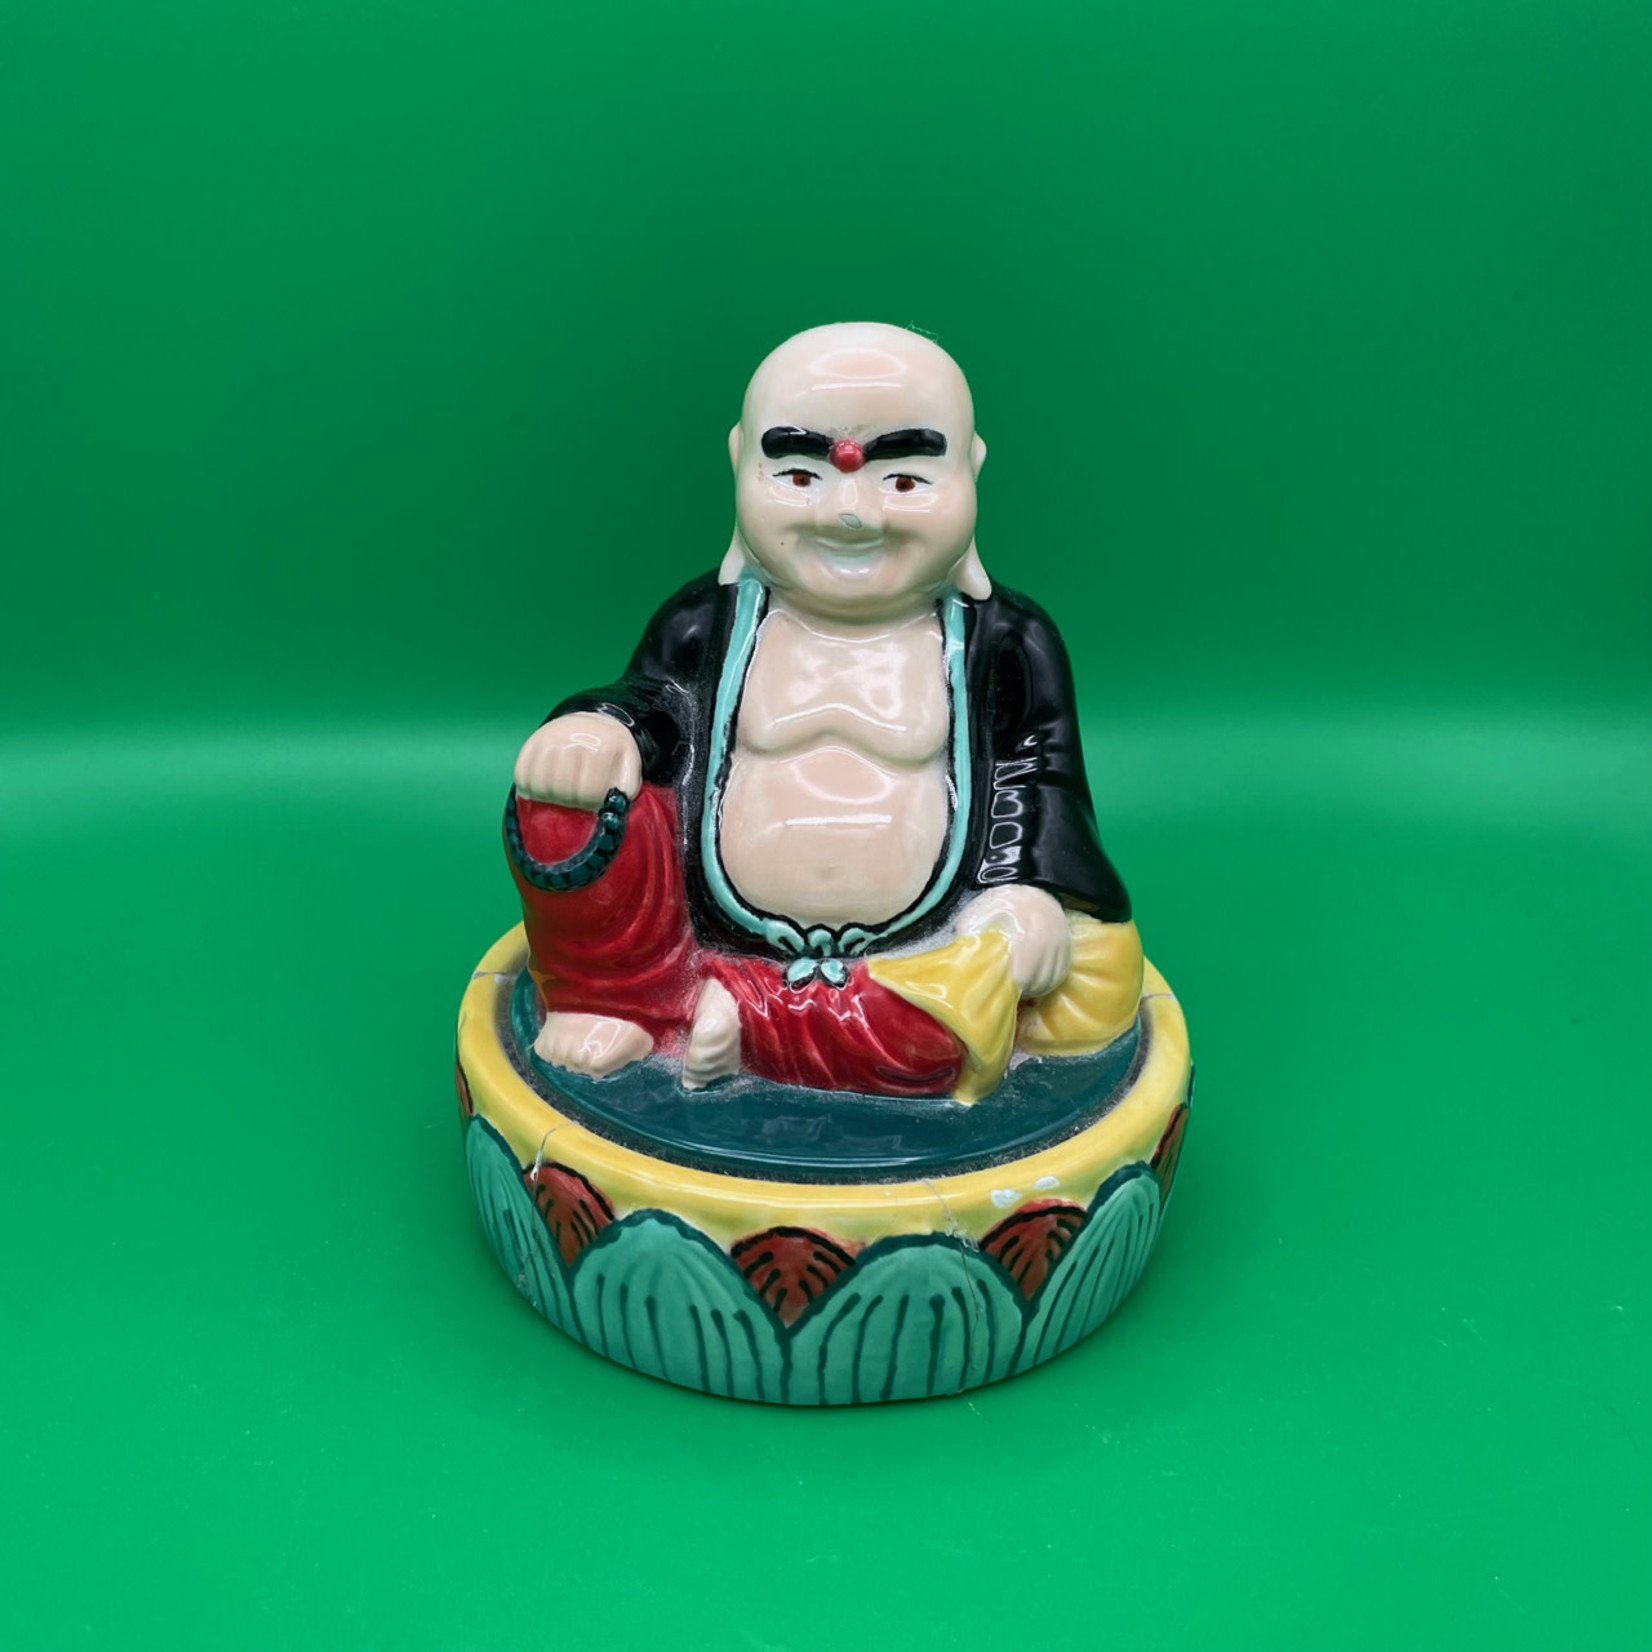 Buddha Box